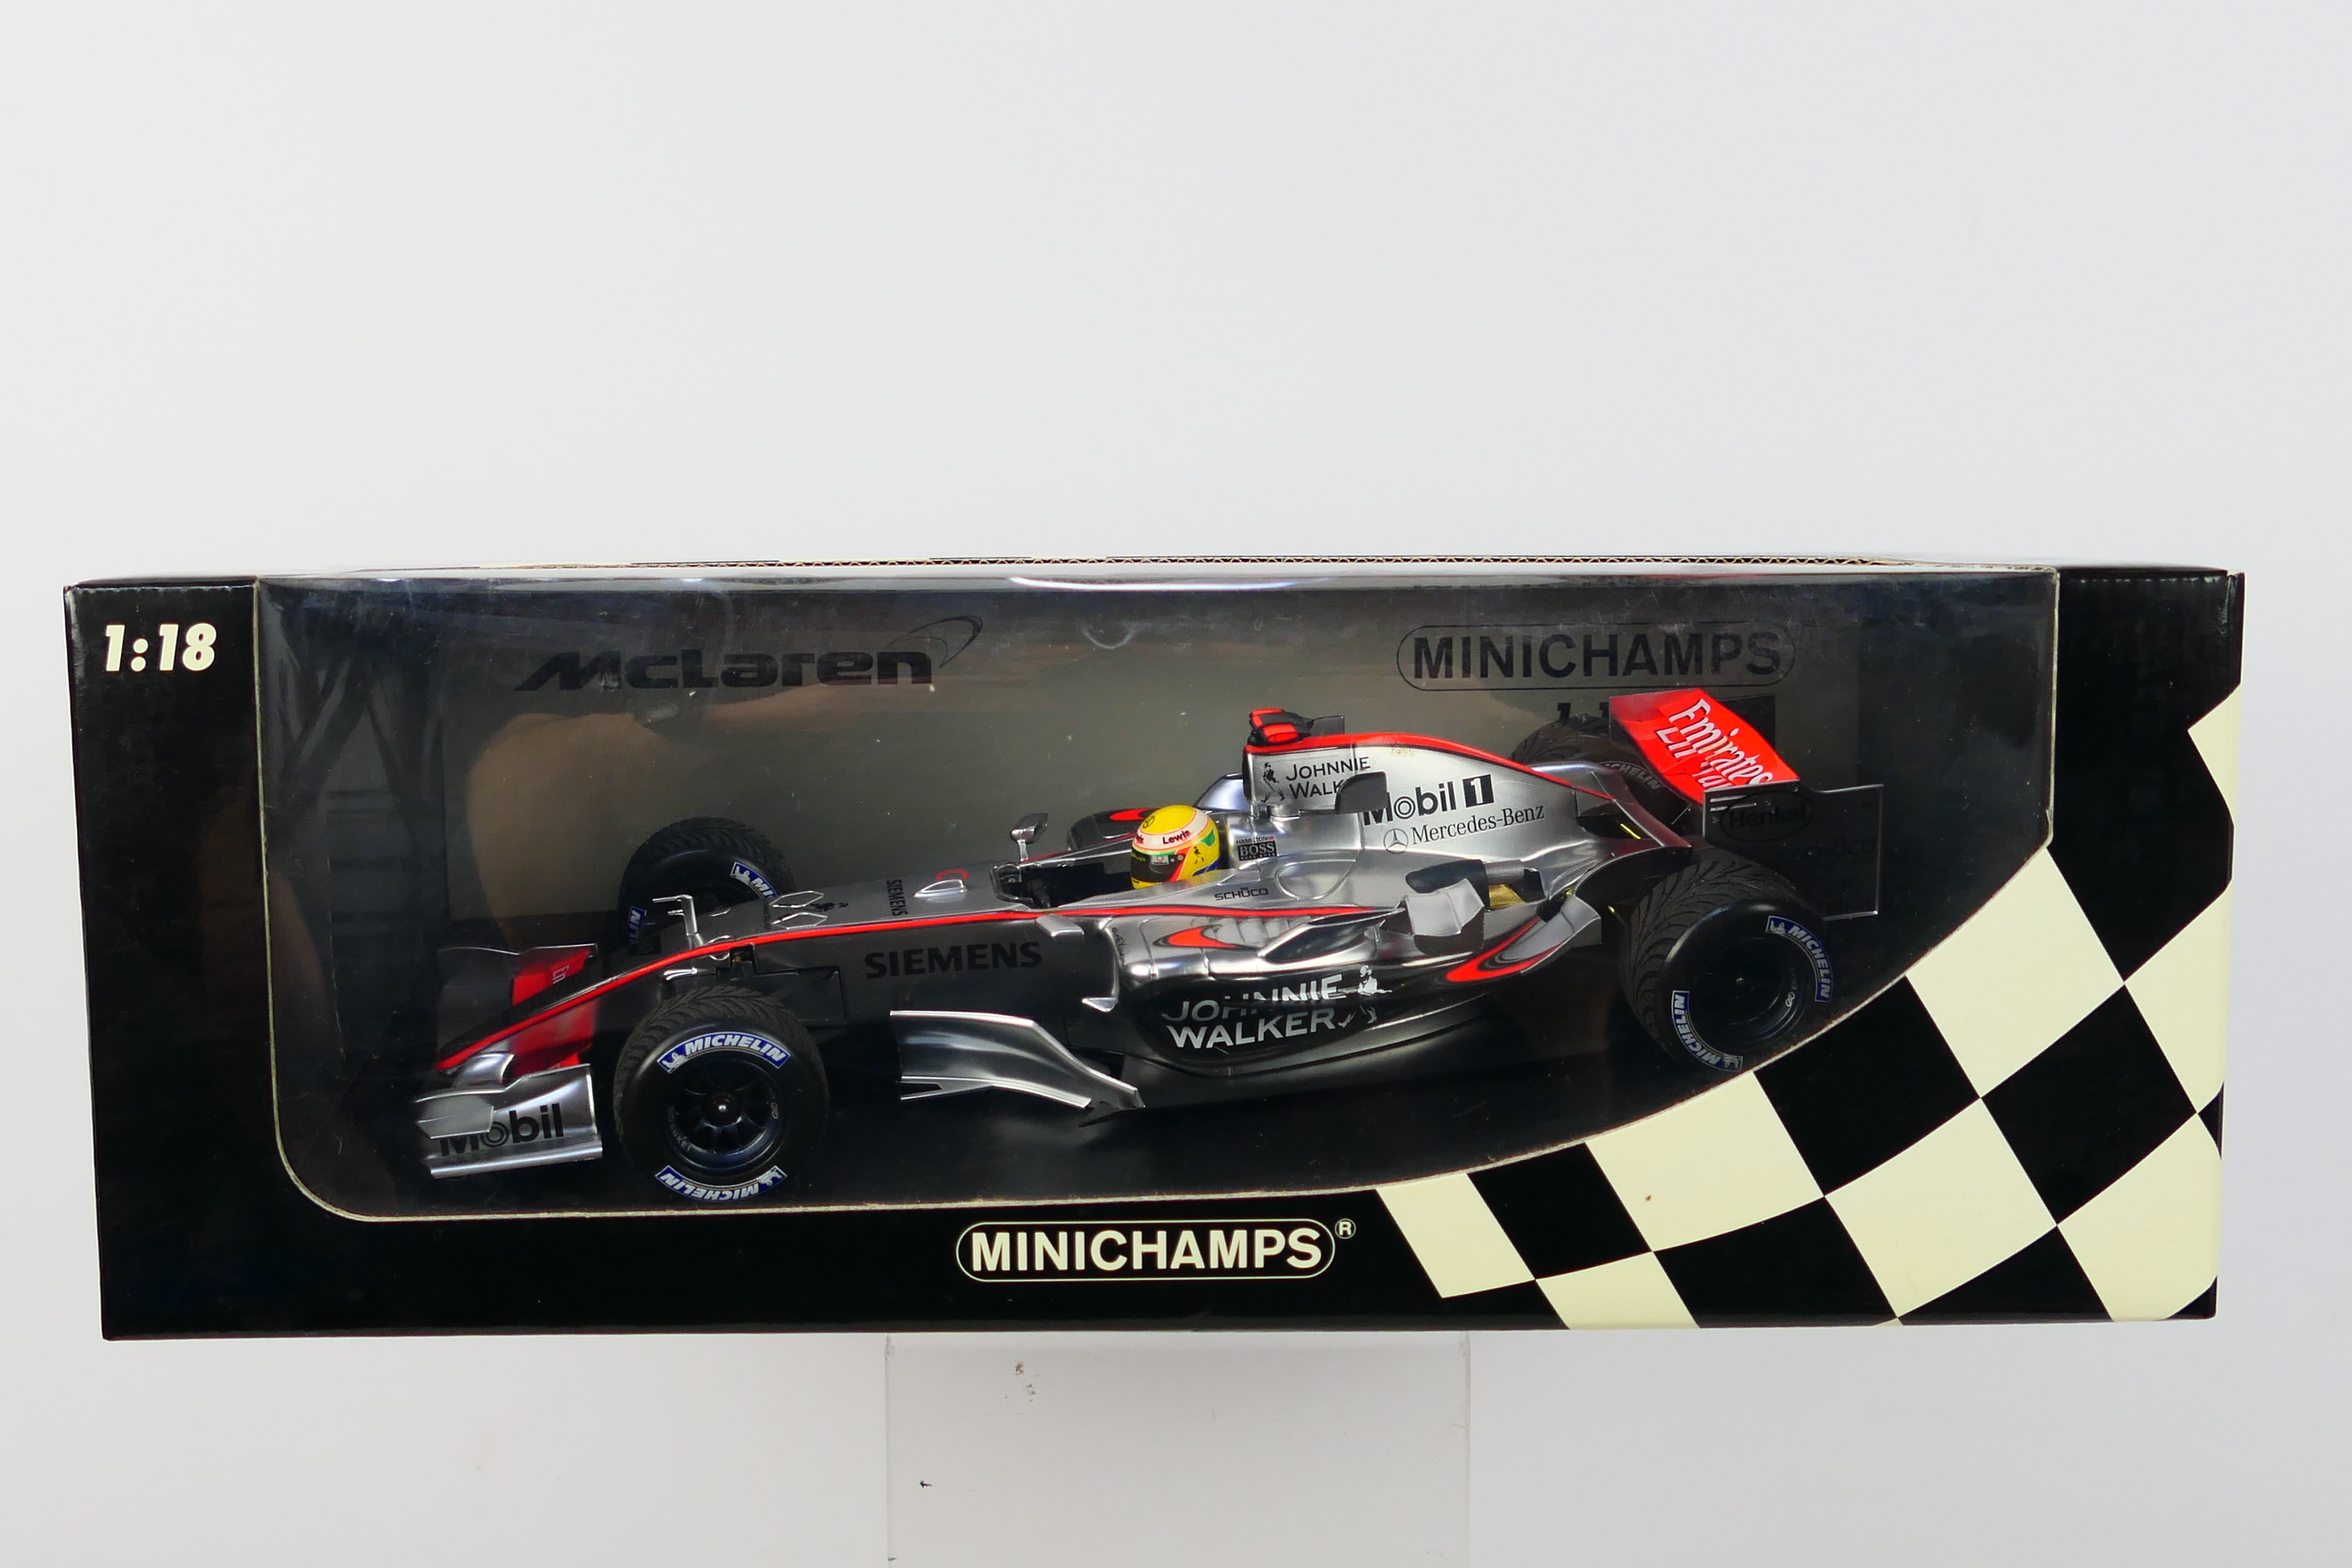 Minichamps - A boxed limited edition 1:18 scale McLaren Mercedes MP4-21 Lewis Hamilton 1st roll out